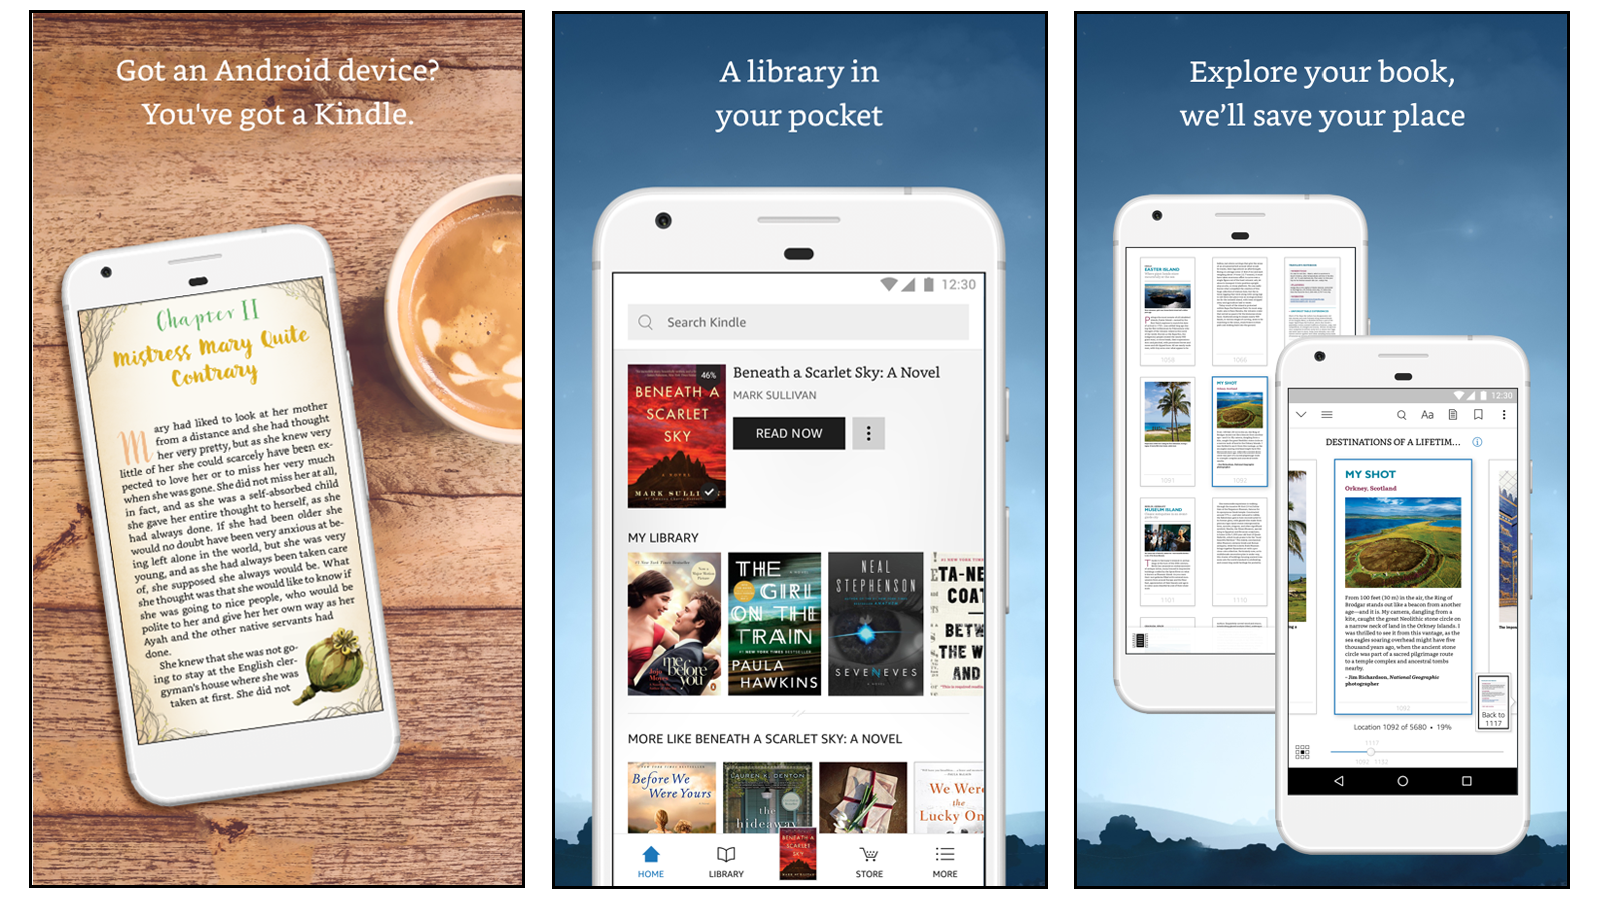 Amazon Kindle best book reading app buy ebooks upload your own ebooks buy listen to audiobooks audible